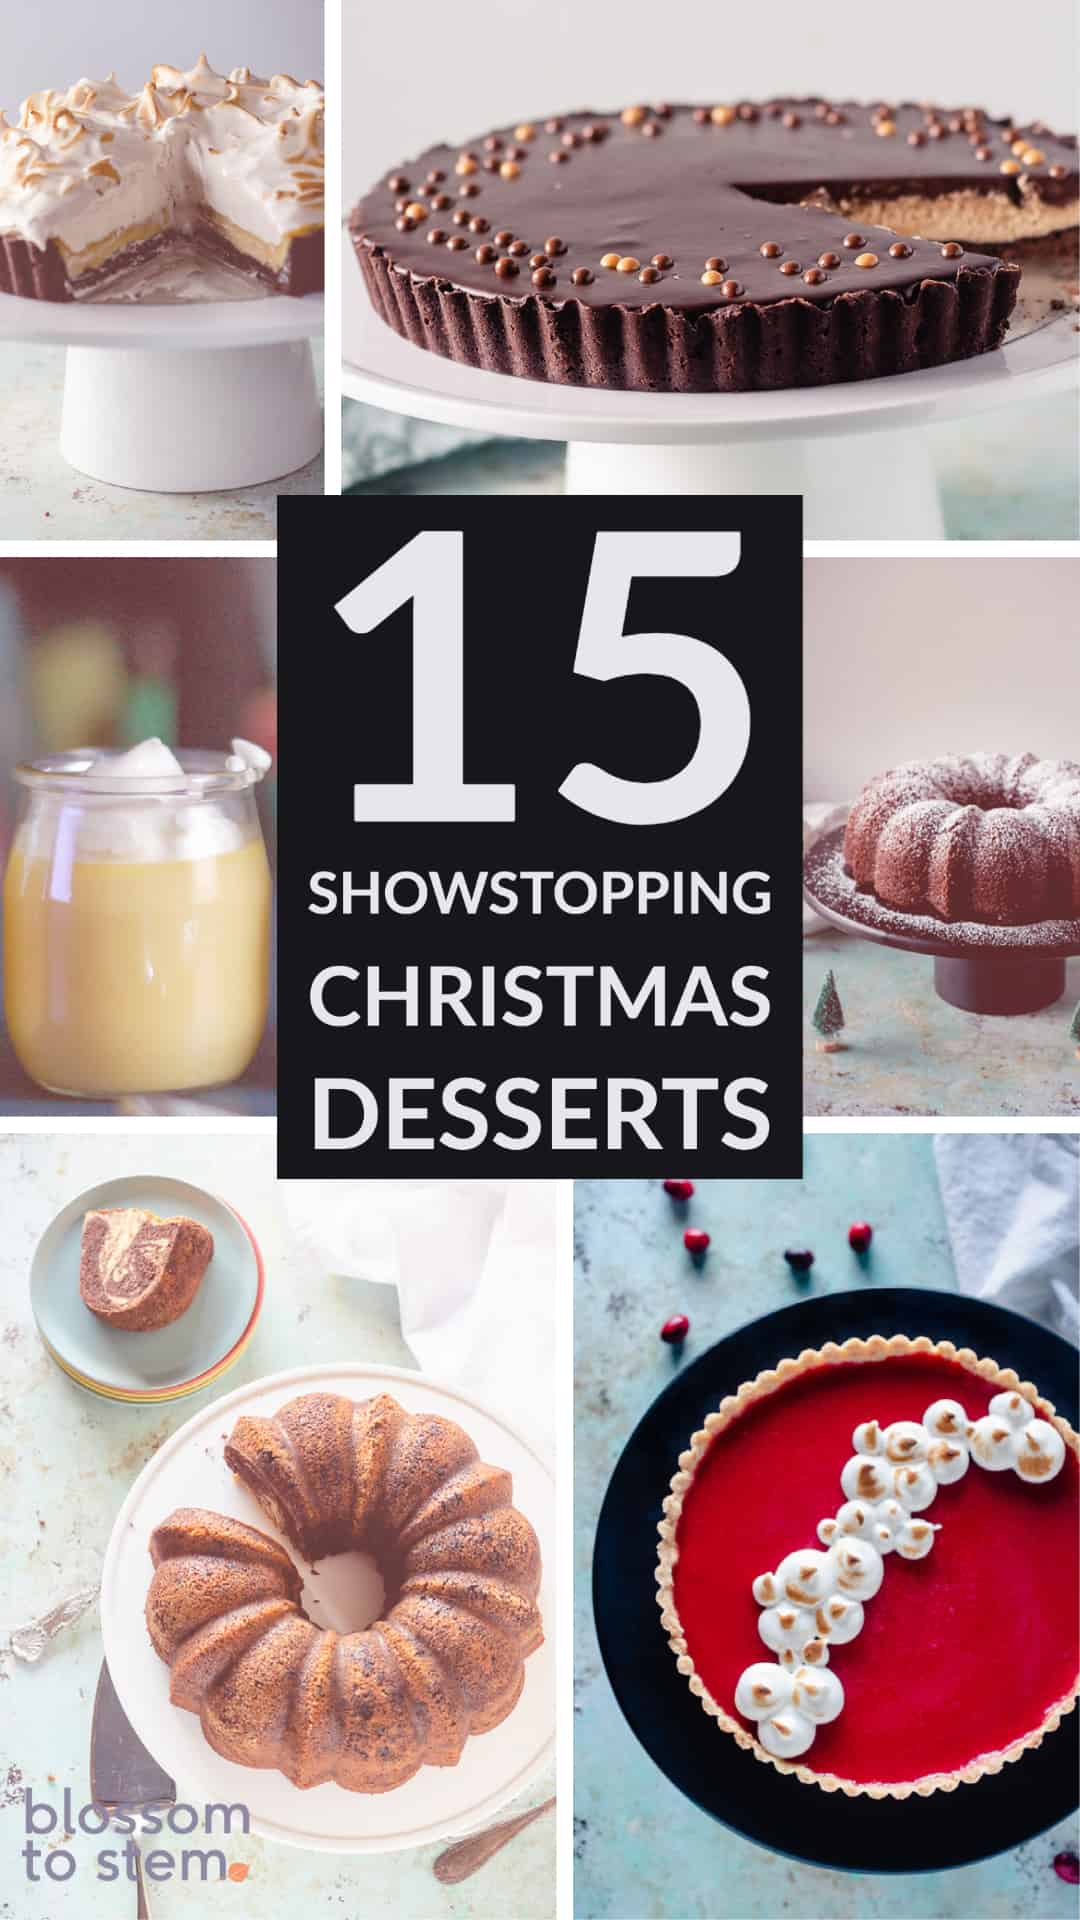 https://www.blossomtostem.net/wp-content/uploads/2020/12/15-Showstopping-Christmas-Desserts.jpg